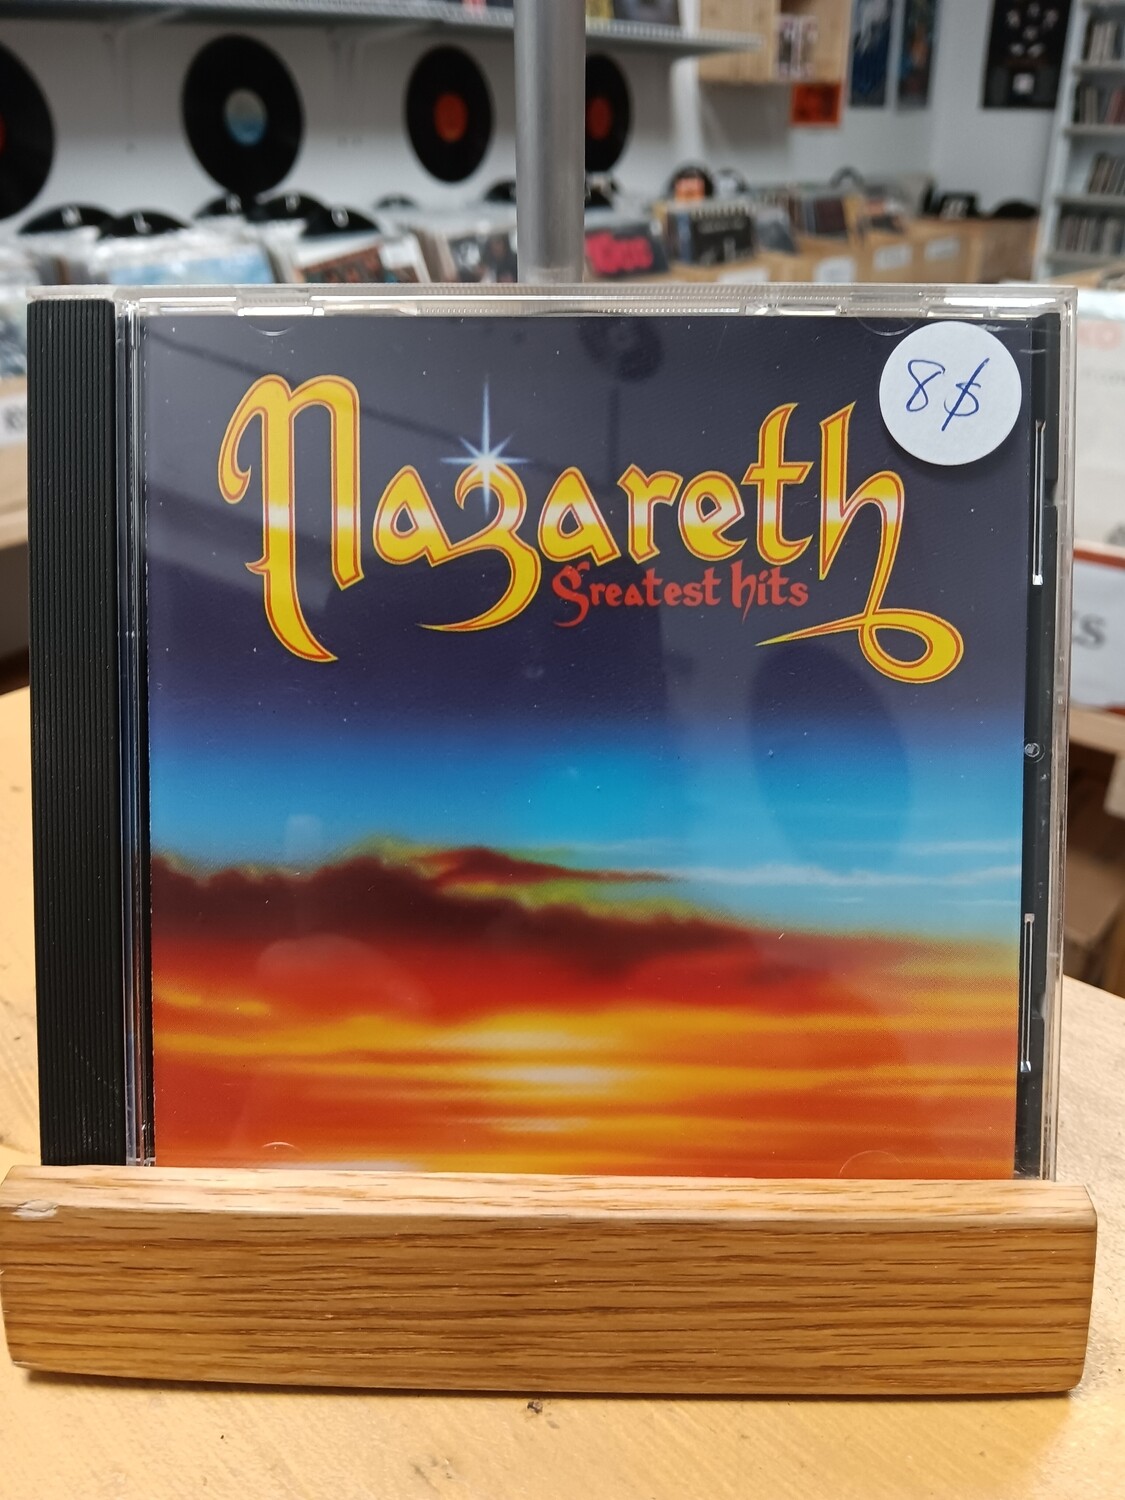 Nazareth - Greatest hits (CD)